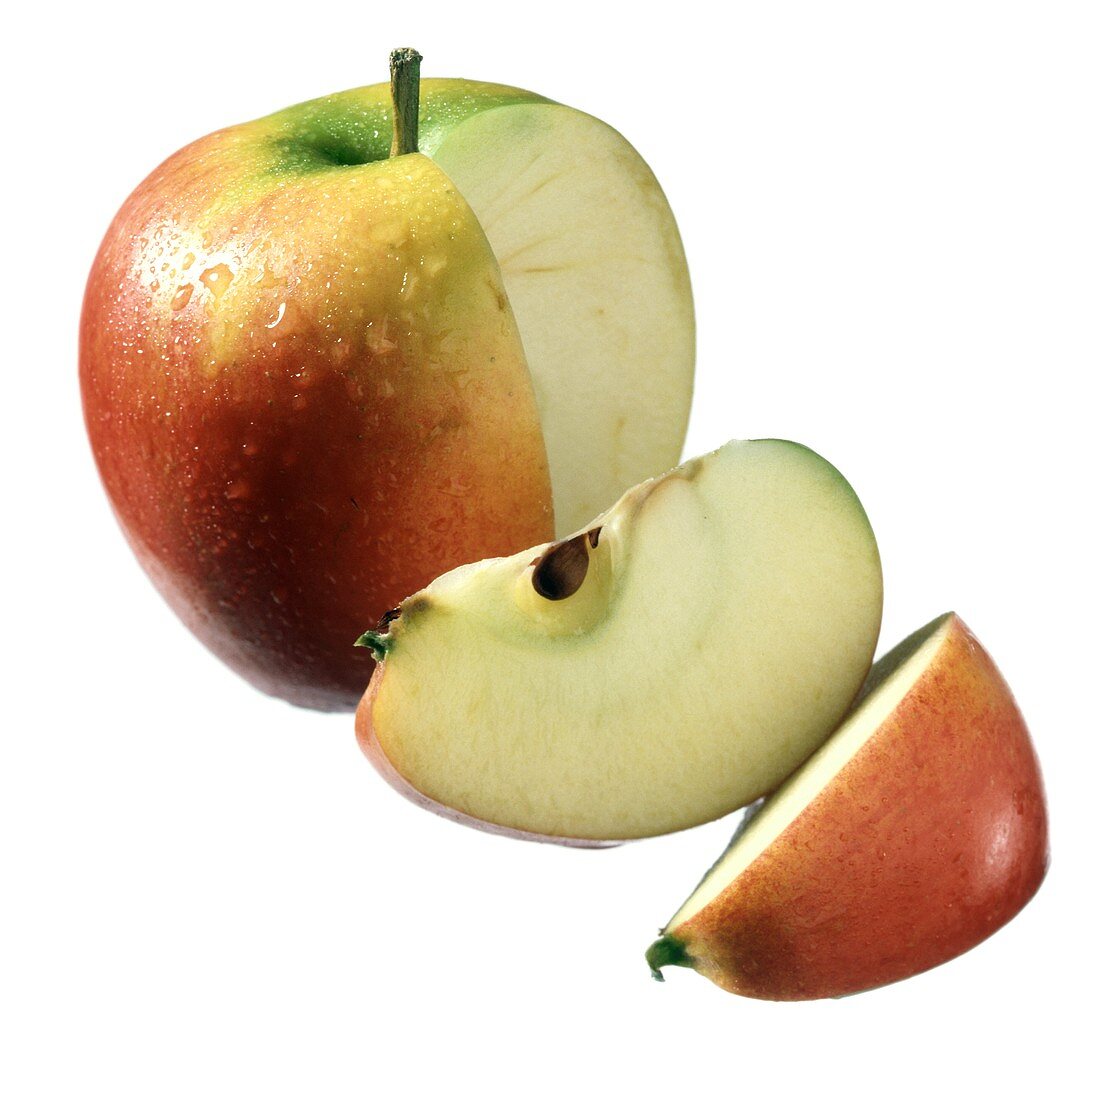 Ein roter Apfel, angeschnitten